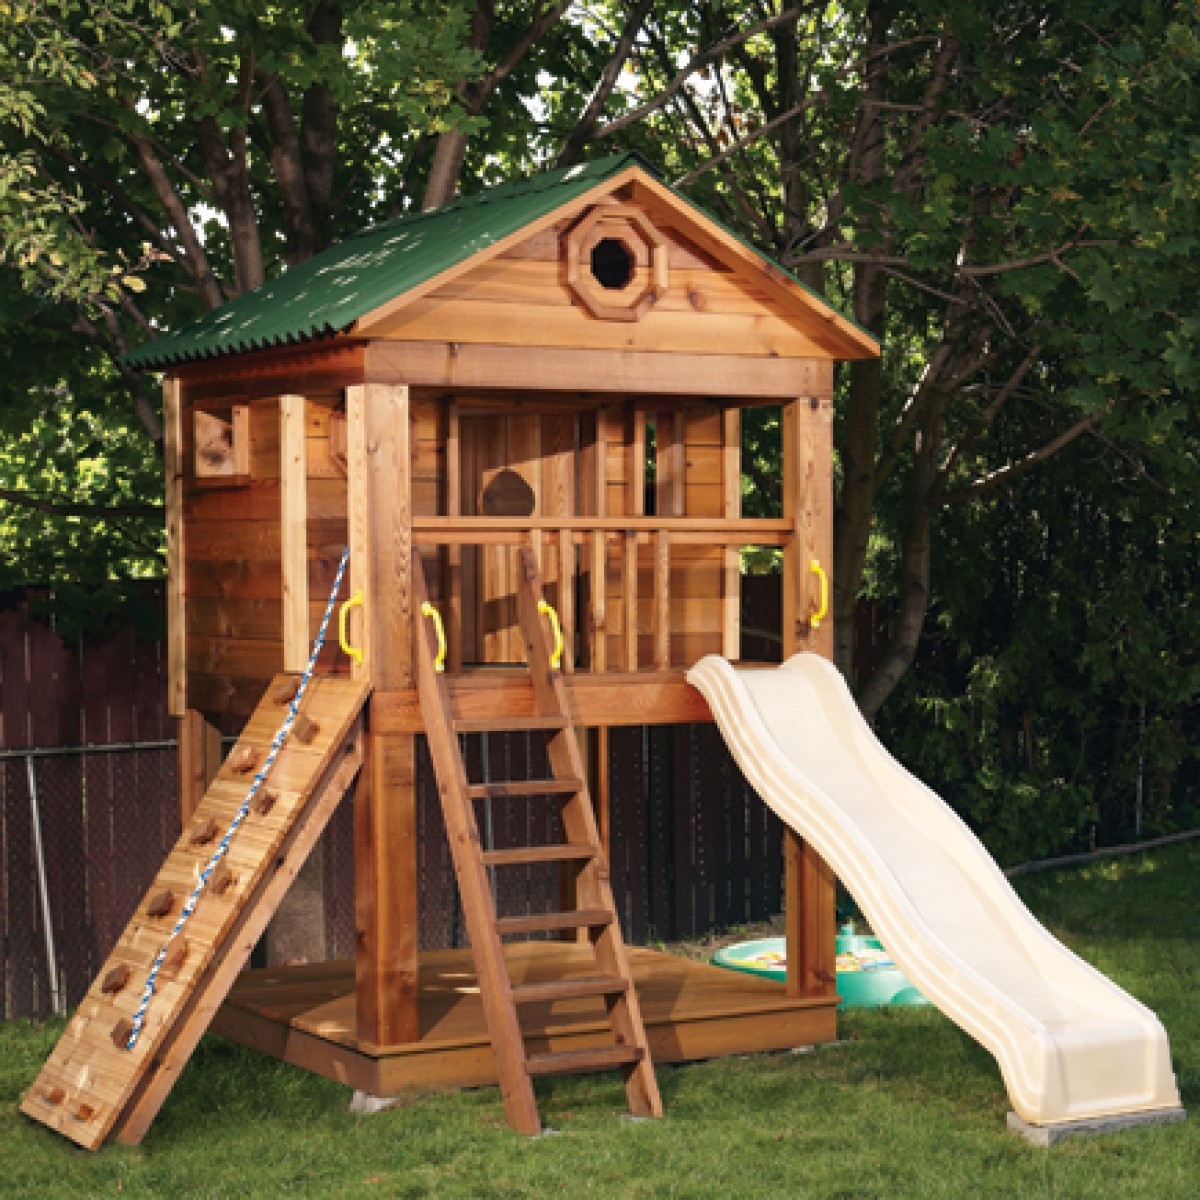 Slide tower playhouse